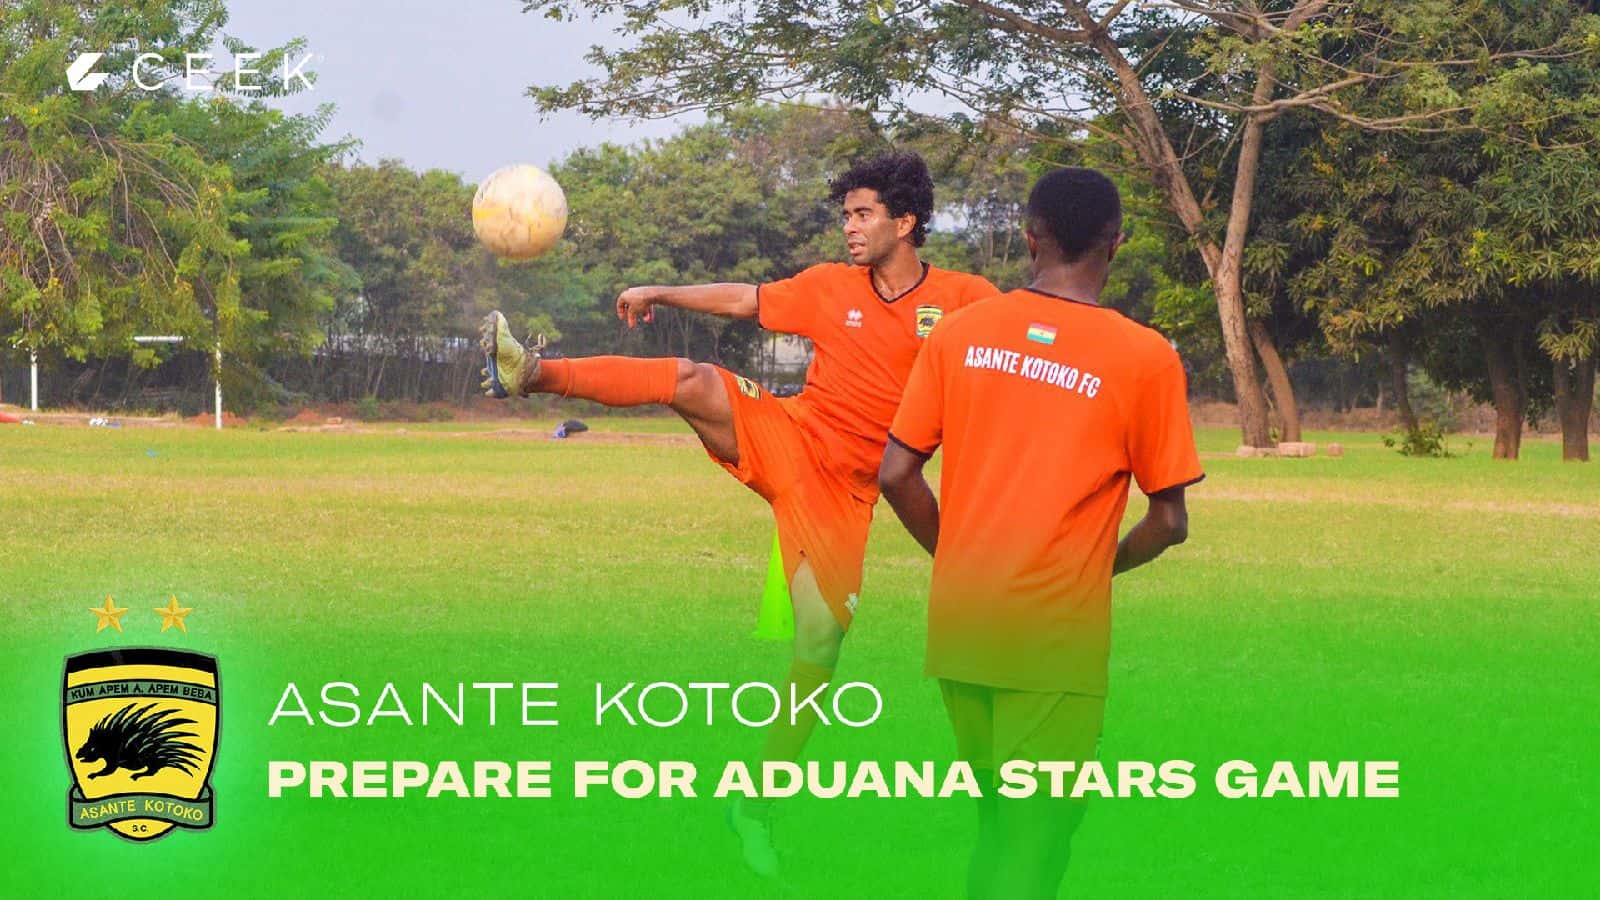 Asante Kotoko Asante Kotoko Prepare for Aduana Stars Game